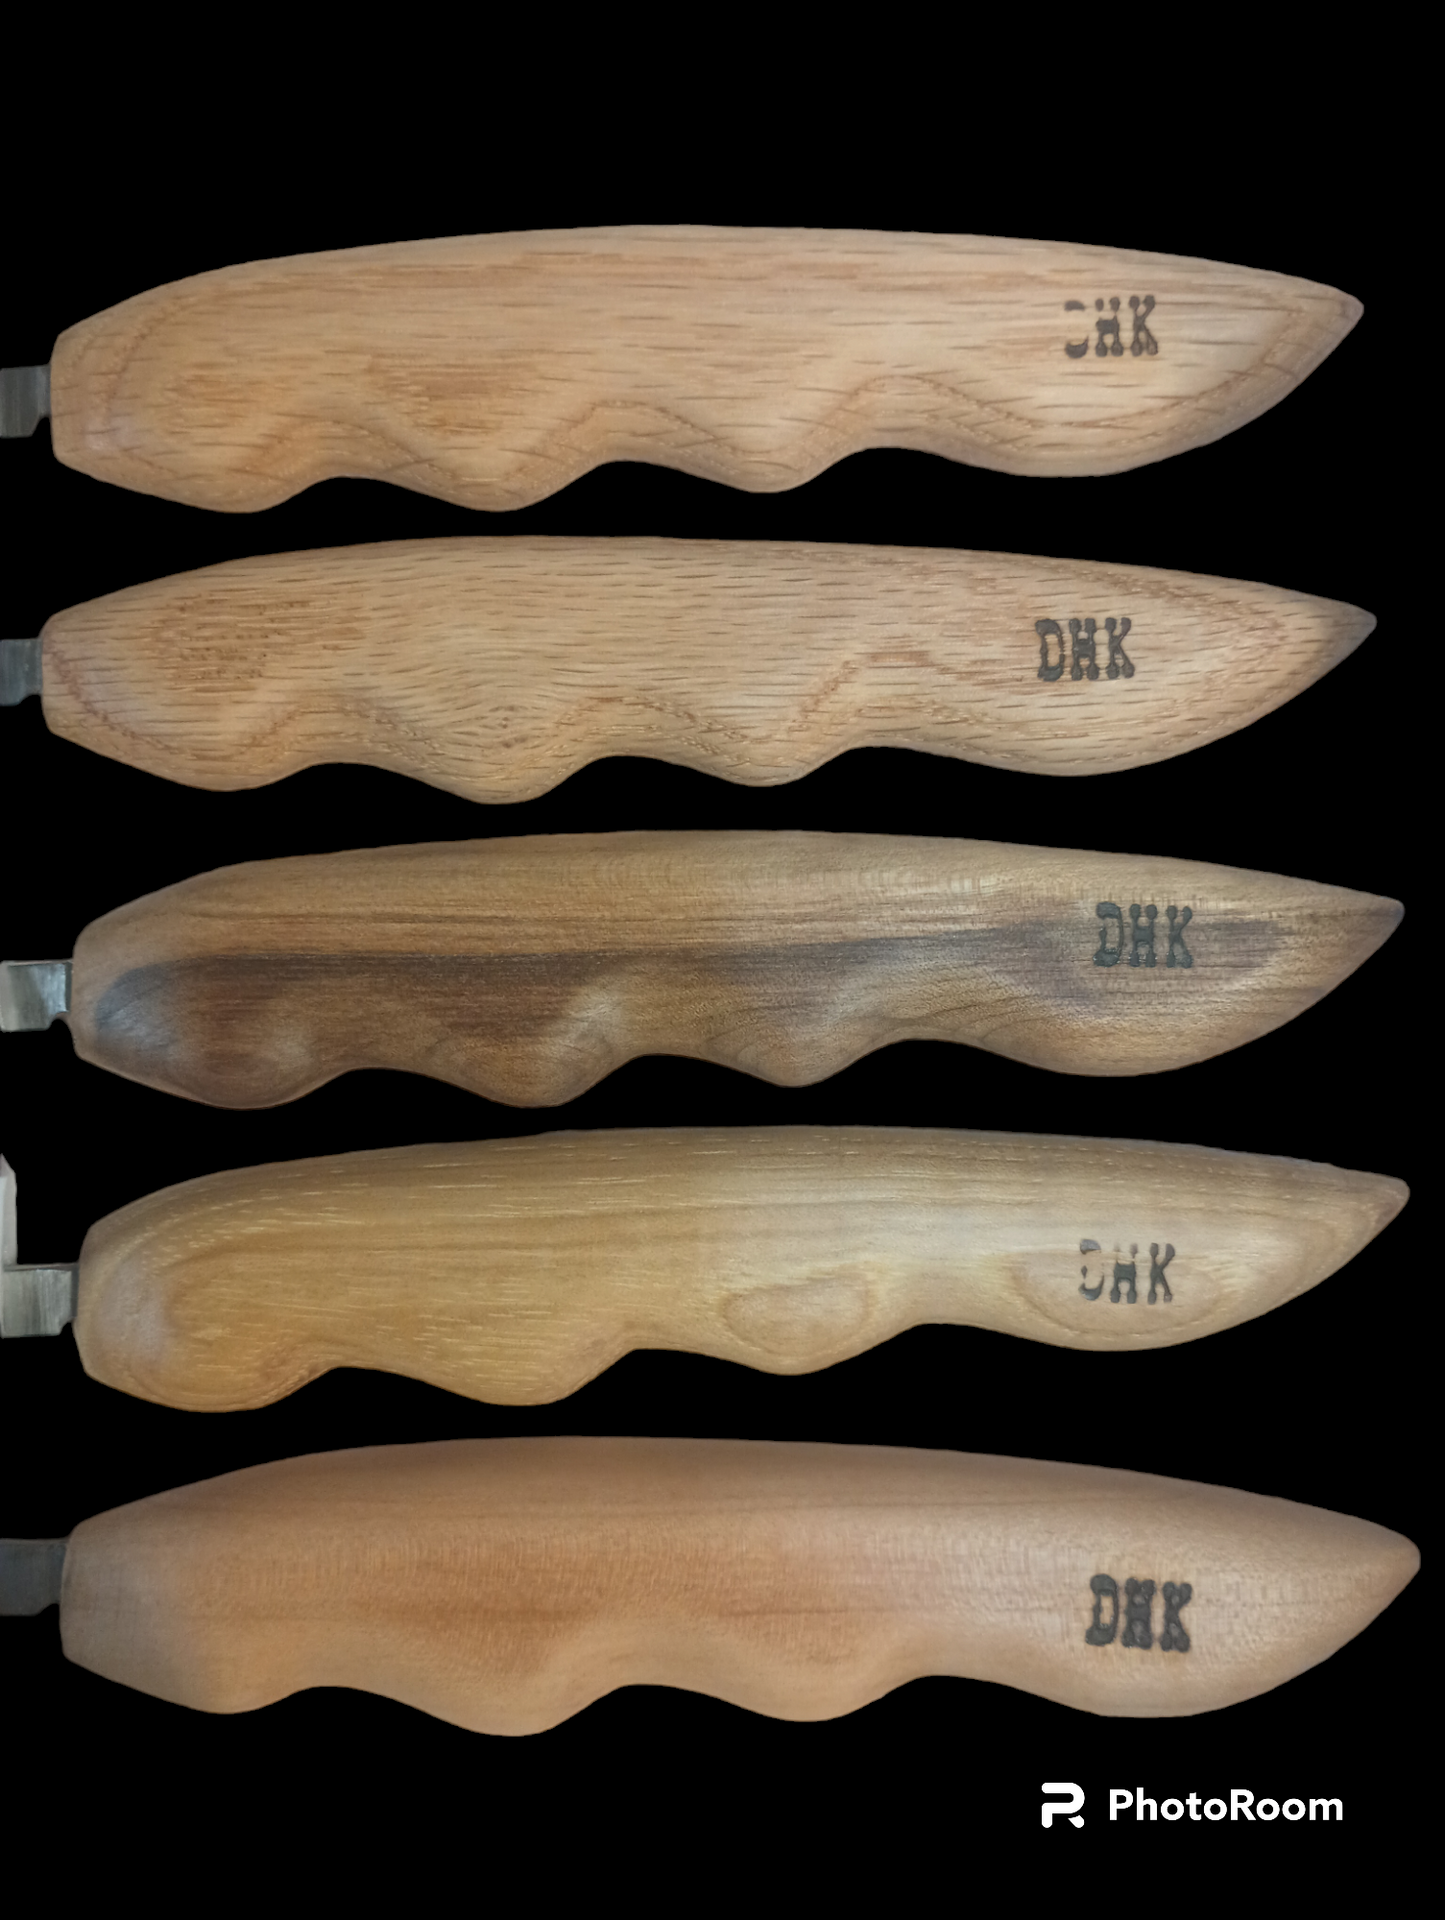 Deep Holler Rough Out Carving Knife- 1 3/4"- FLAT GRIND- FINGERGROOVE HANDLE